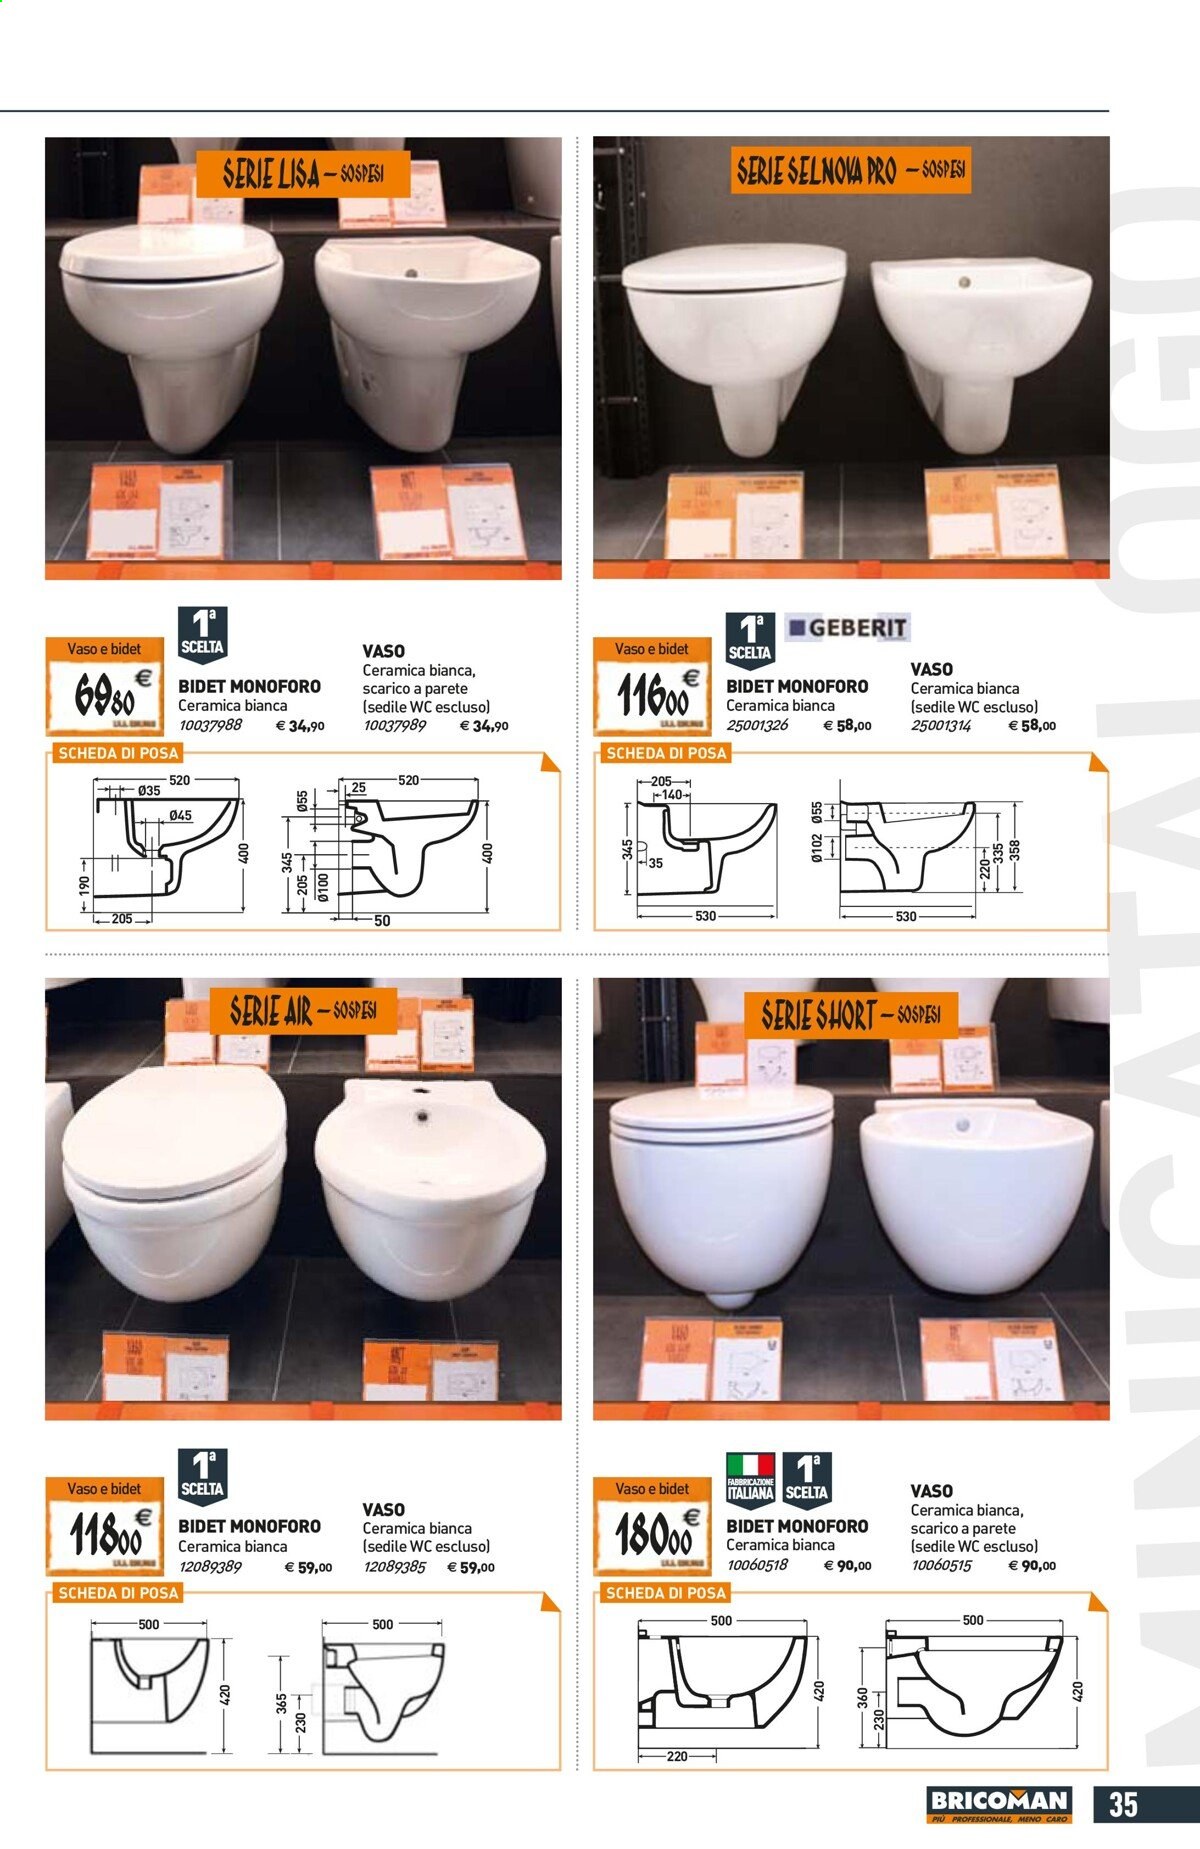 thumbnail - Volantino Tecnomat by Bricoman - 24/6/2021 - 28/7/2021 - Prodotti in offerta - bidet monoforo, sedile WC, vaso, bidet, vaso in ceramica. Pagina 35.